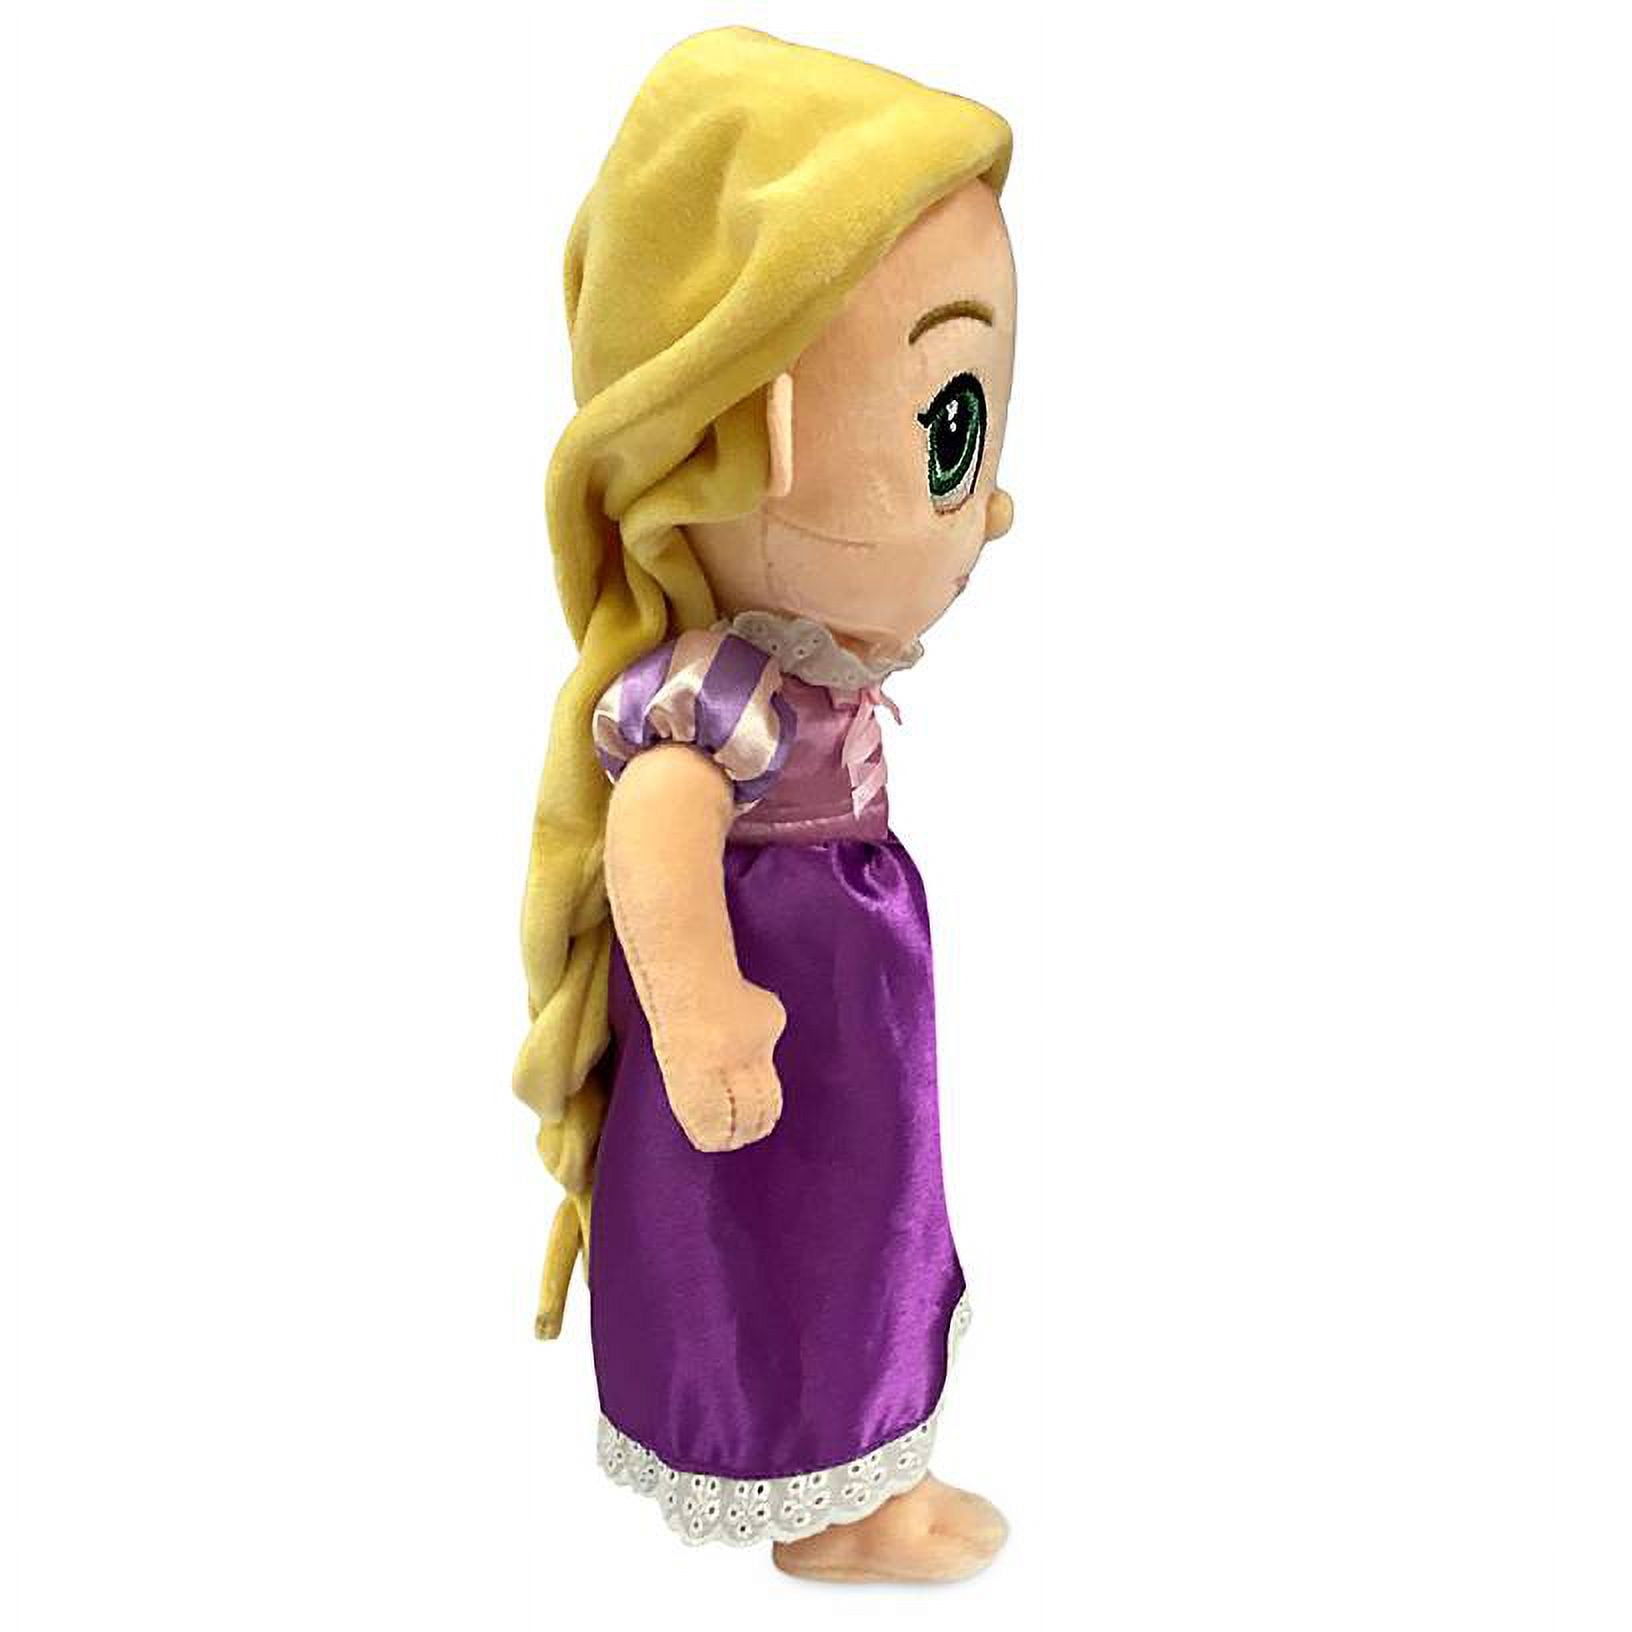 NEW 19 Disney Store Rapunzel Plush Doll Princess Tangled Stuffed